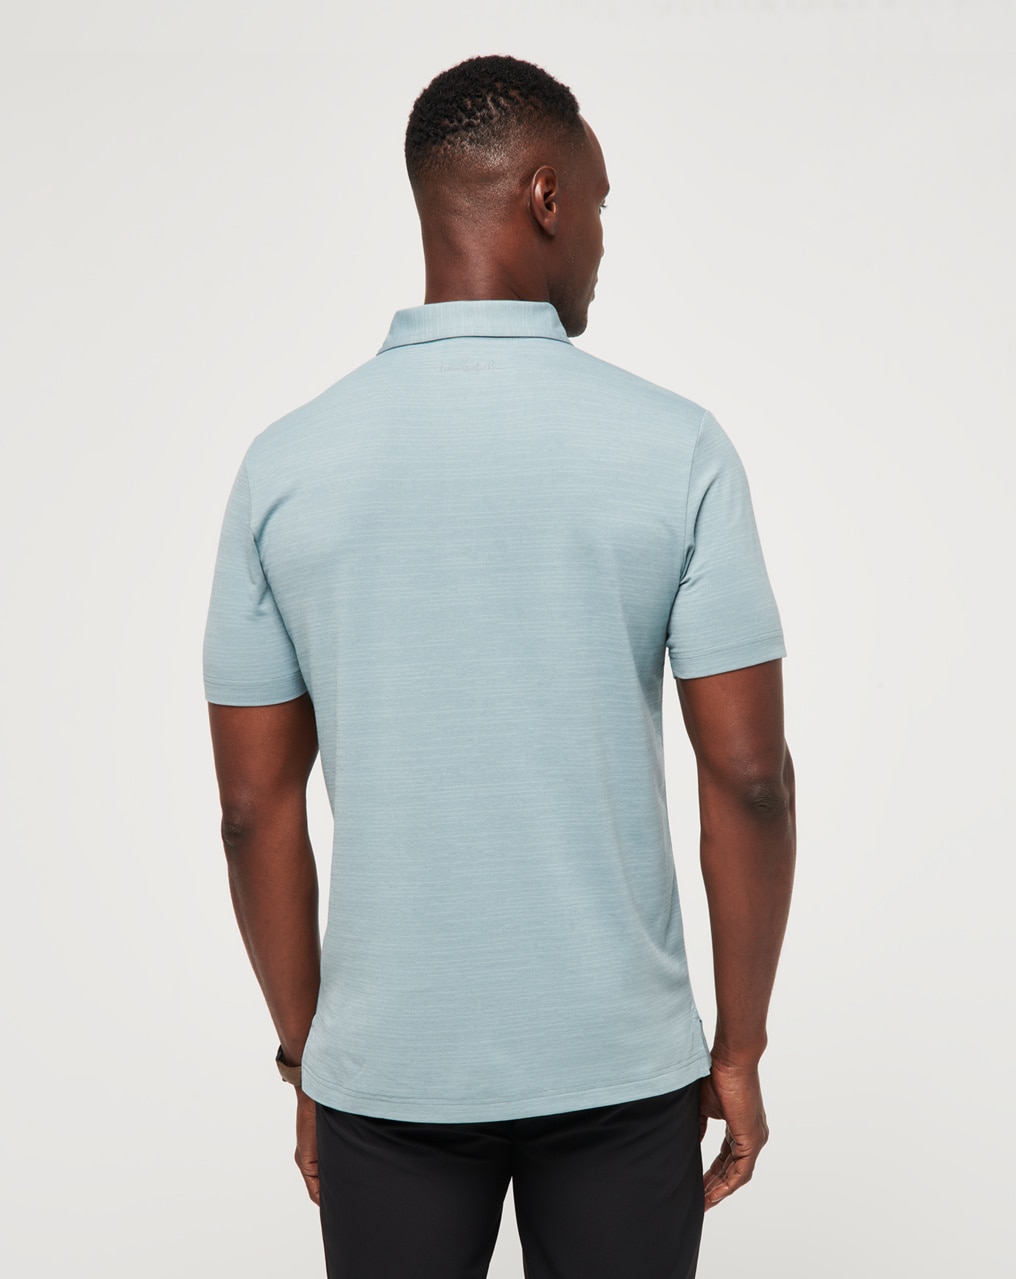 Nike The Athletic Dept Polo Shirt Mens Size XL Gray Stripe Short Sleeve